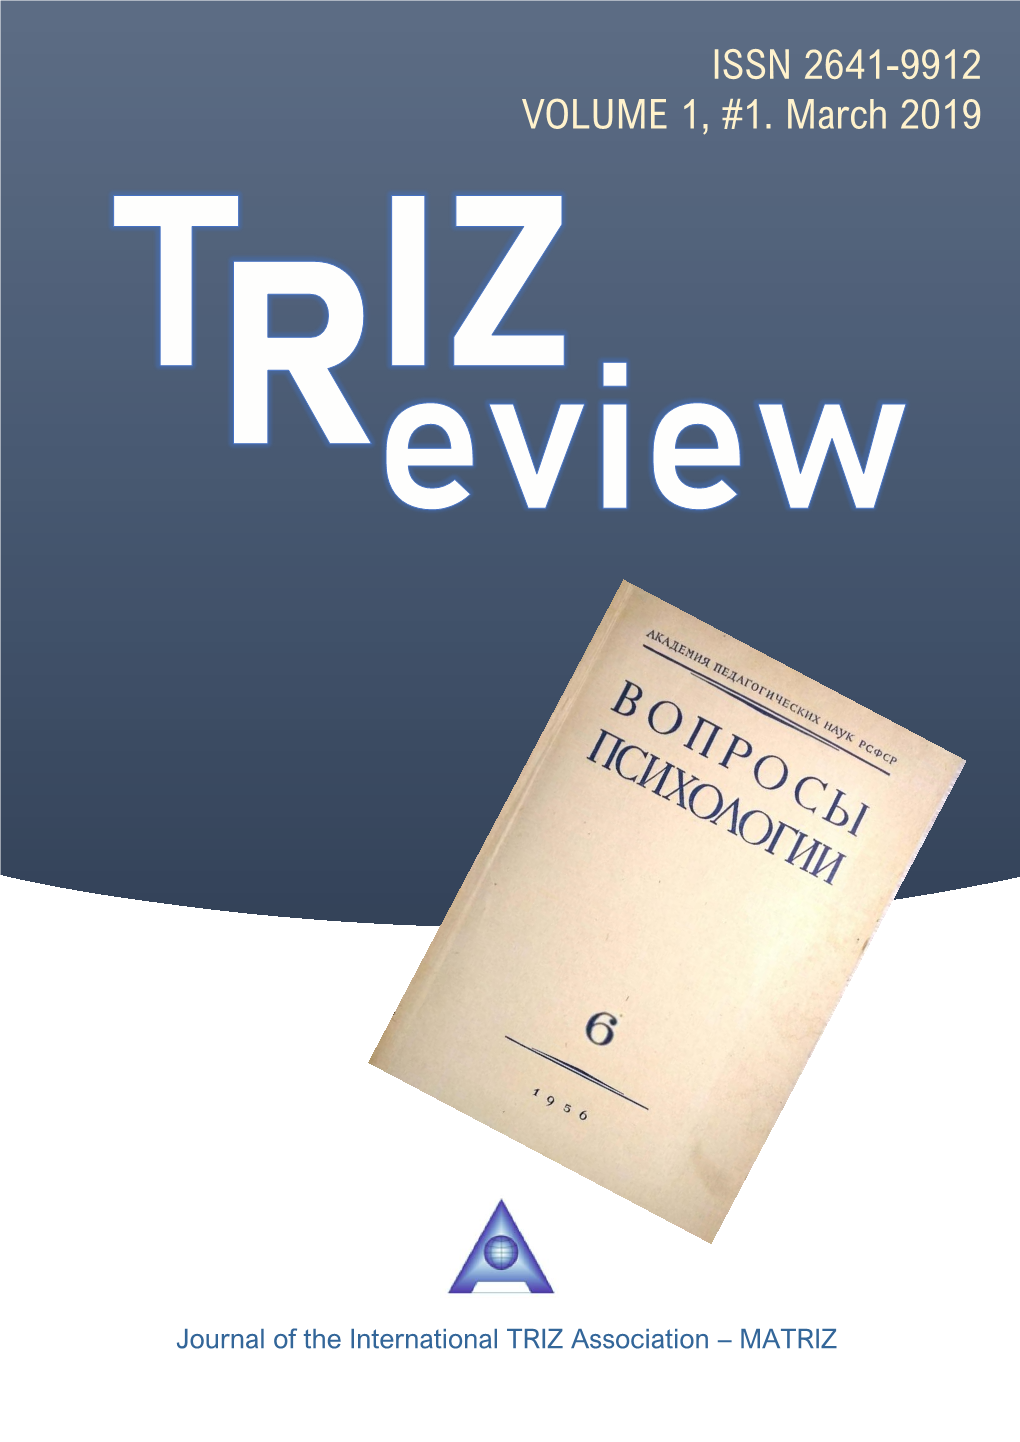 TRIZ Review Vol 1 No 1